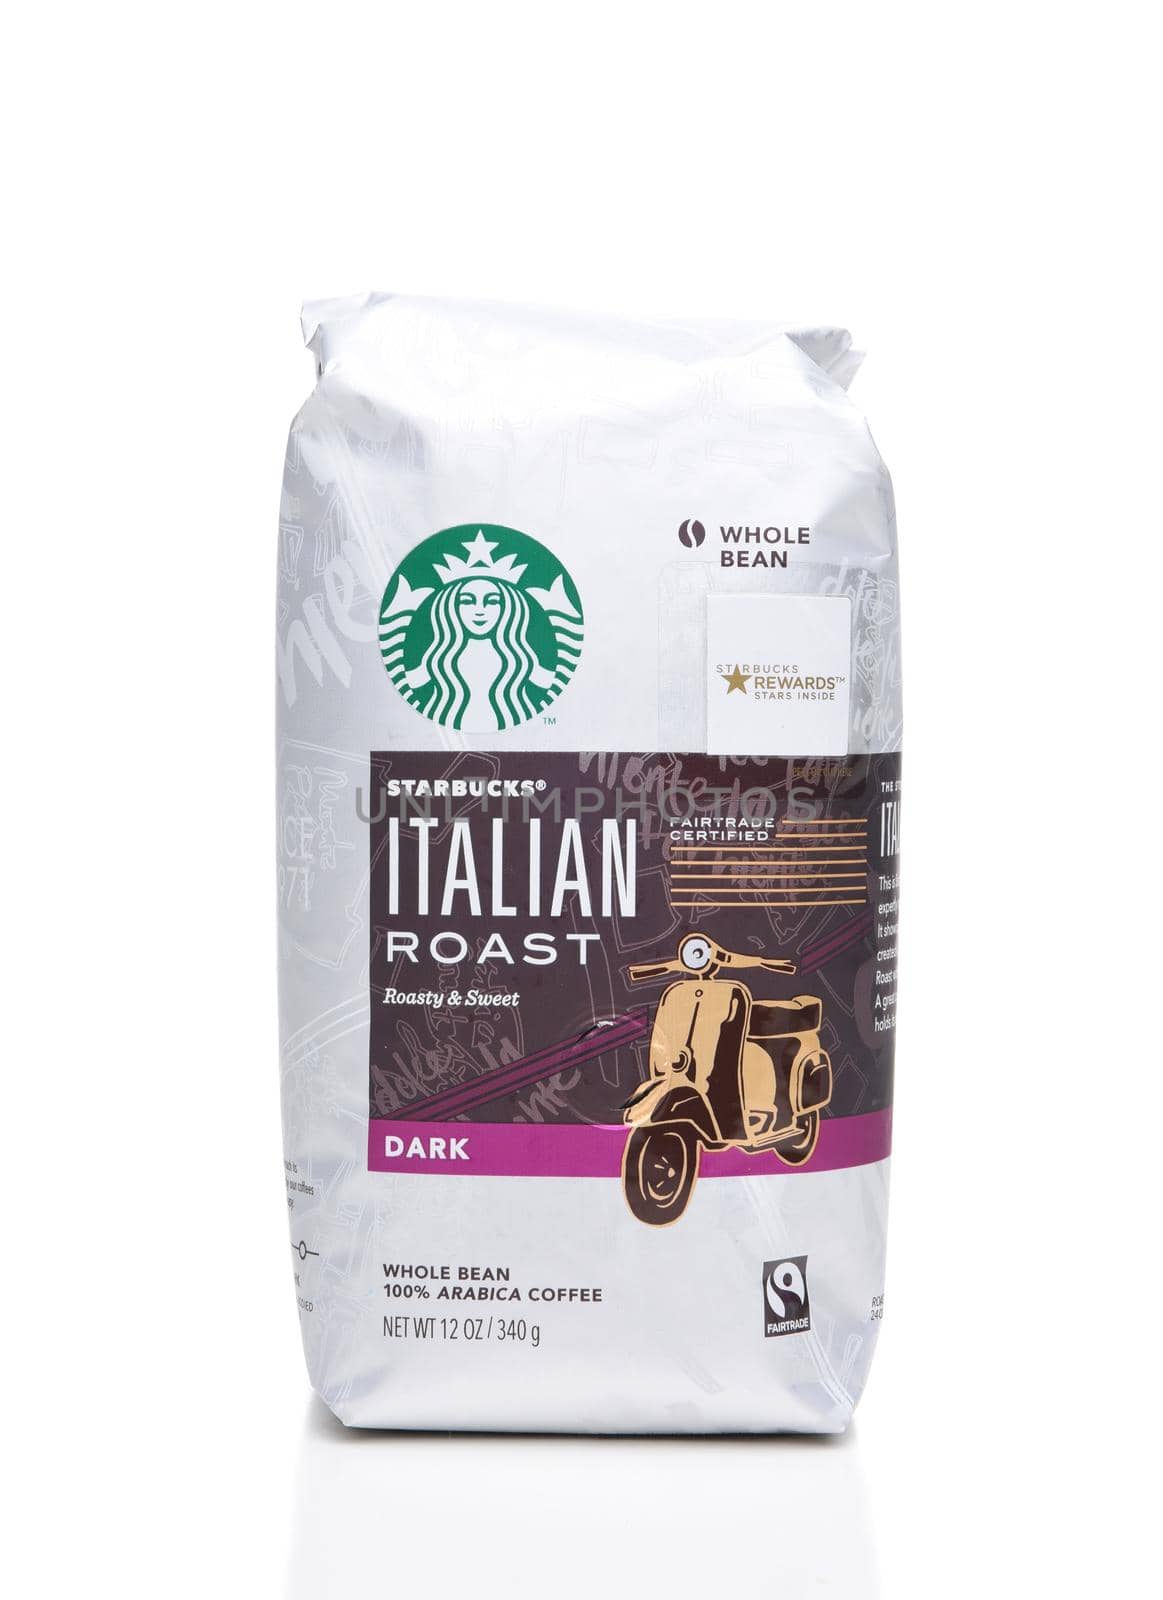 Starbucks Italian Roast Coffee Beans by sCukrov